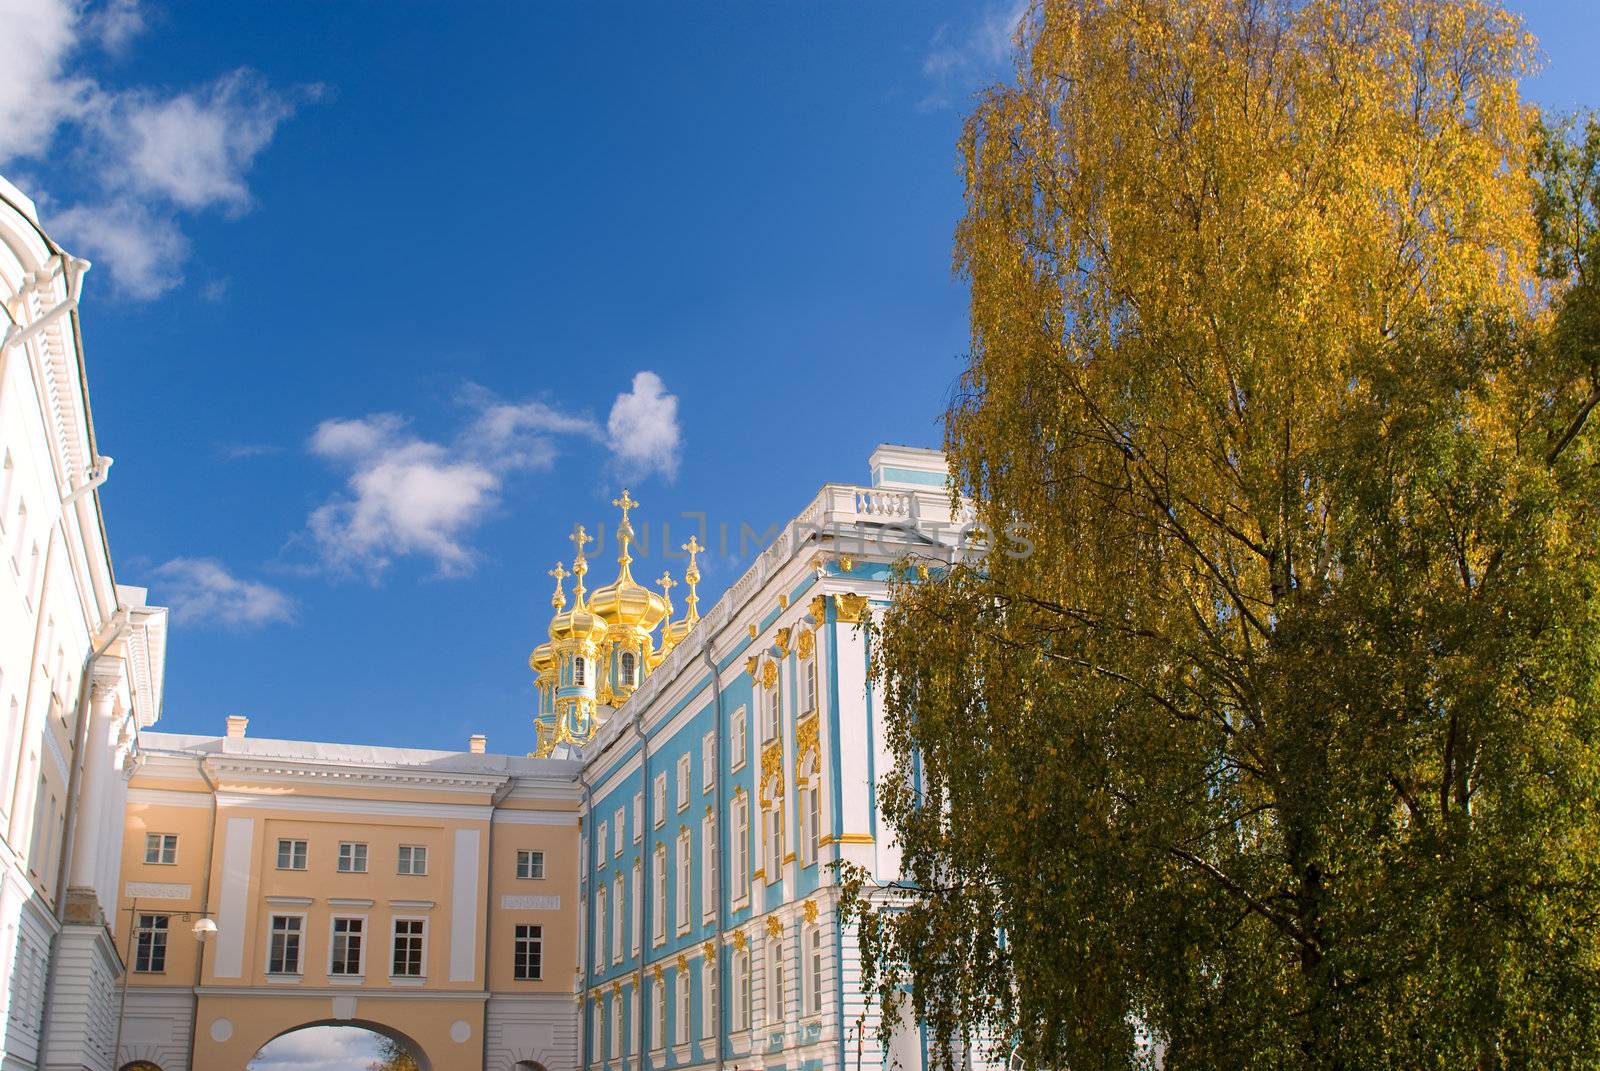 Pushkin's lyceum in Tsarskoe selo by BIG_TAU